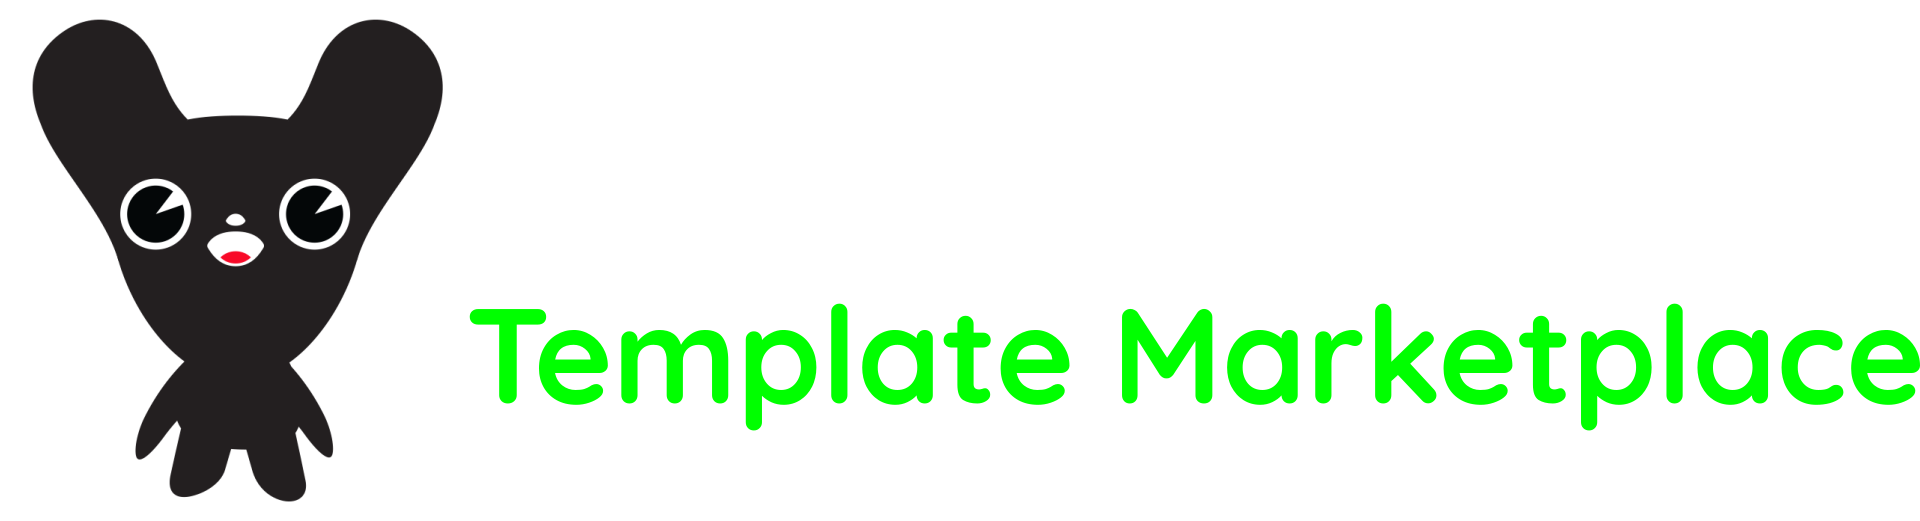 CasparCG Template Marketplace